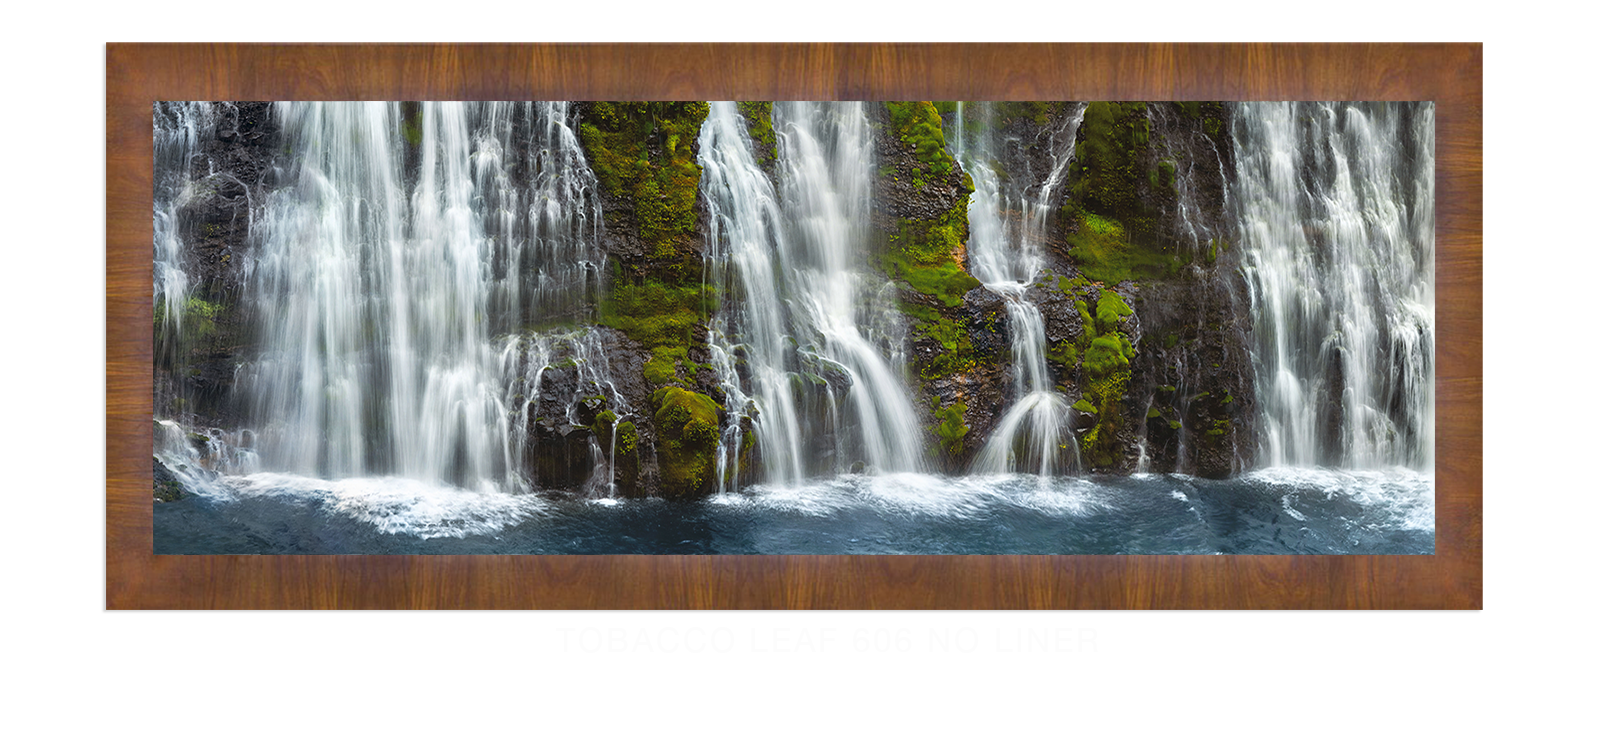 25_Tobacco Leaf 606 w_No Liner